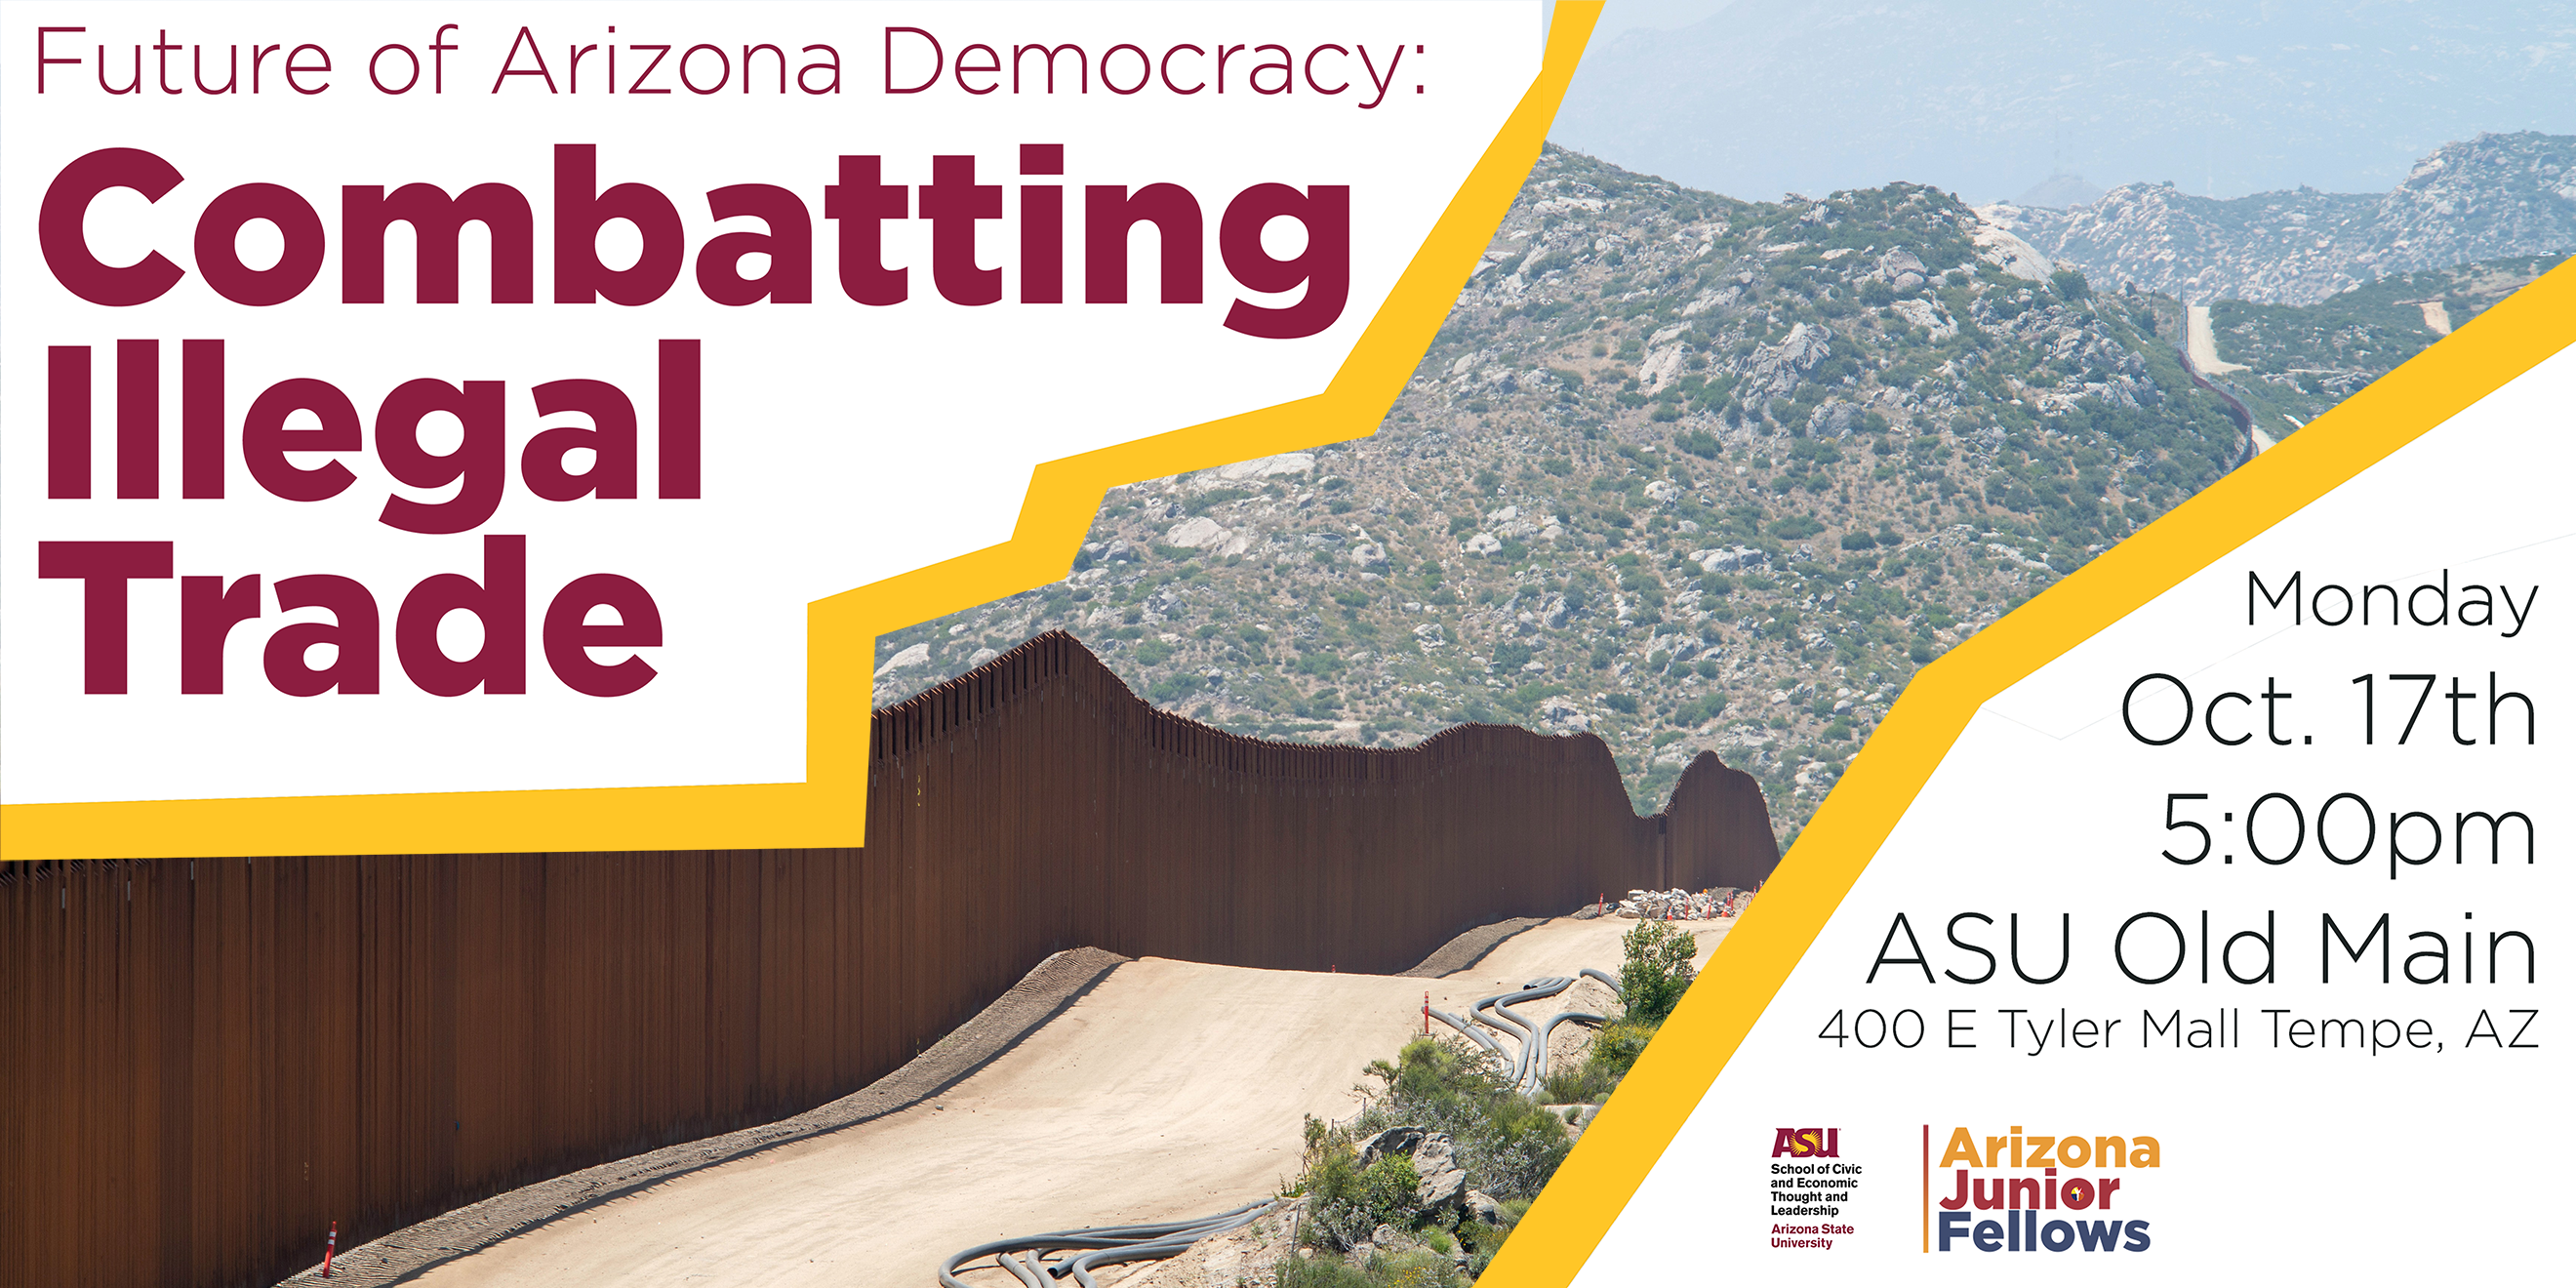 The Future of Arizona Democracy